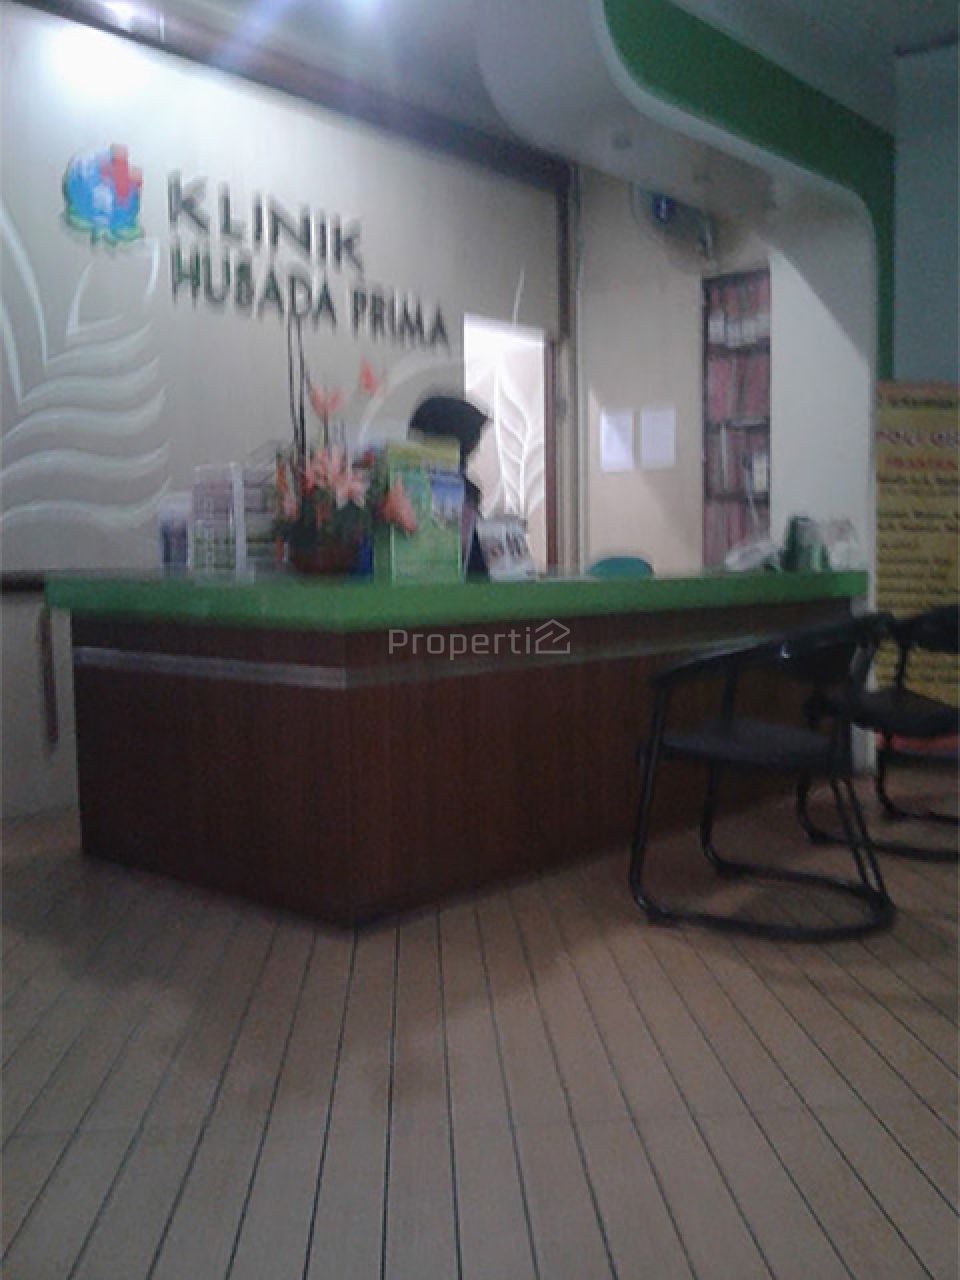 Business Assets of Husada Prima Clinic in Malang City, Lowokwaru